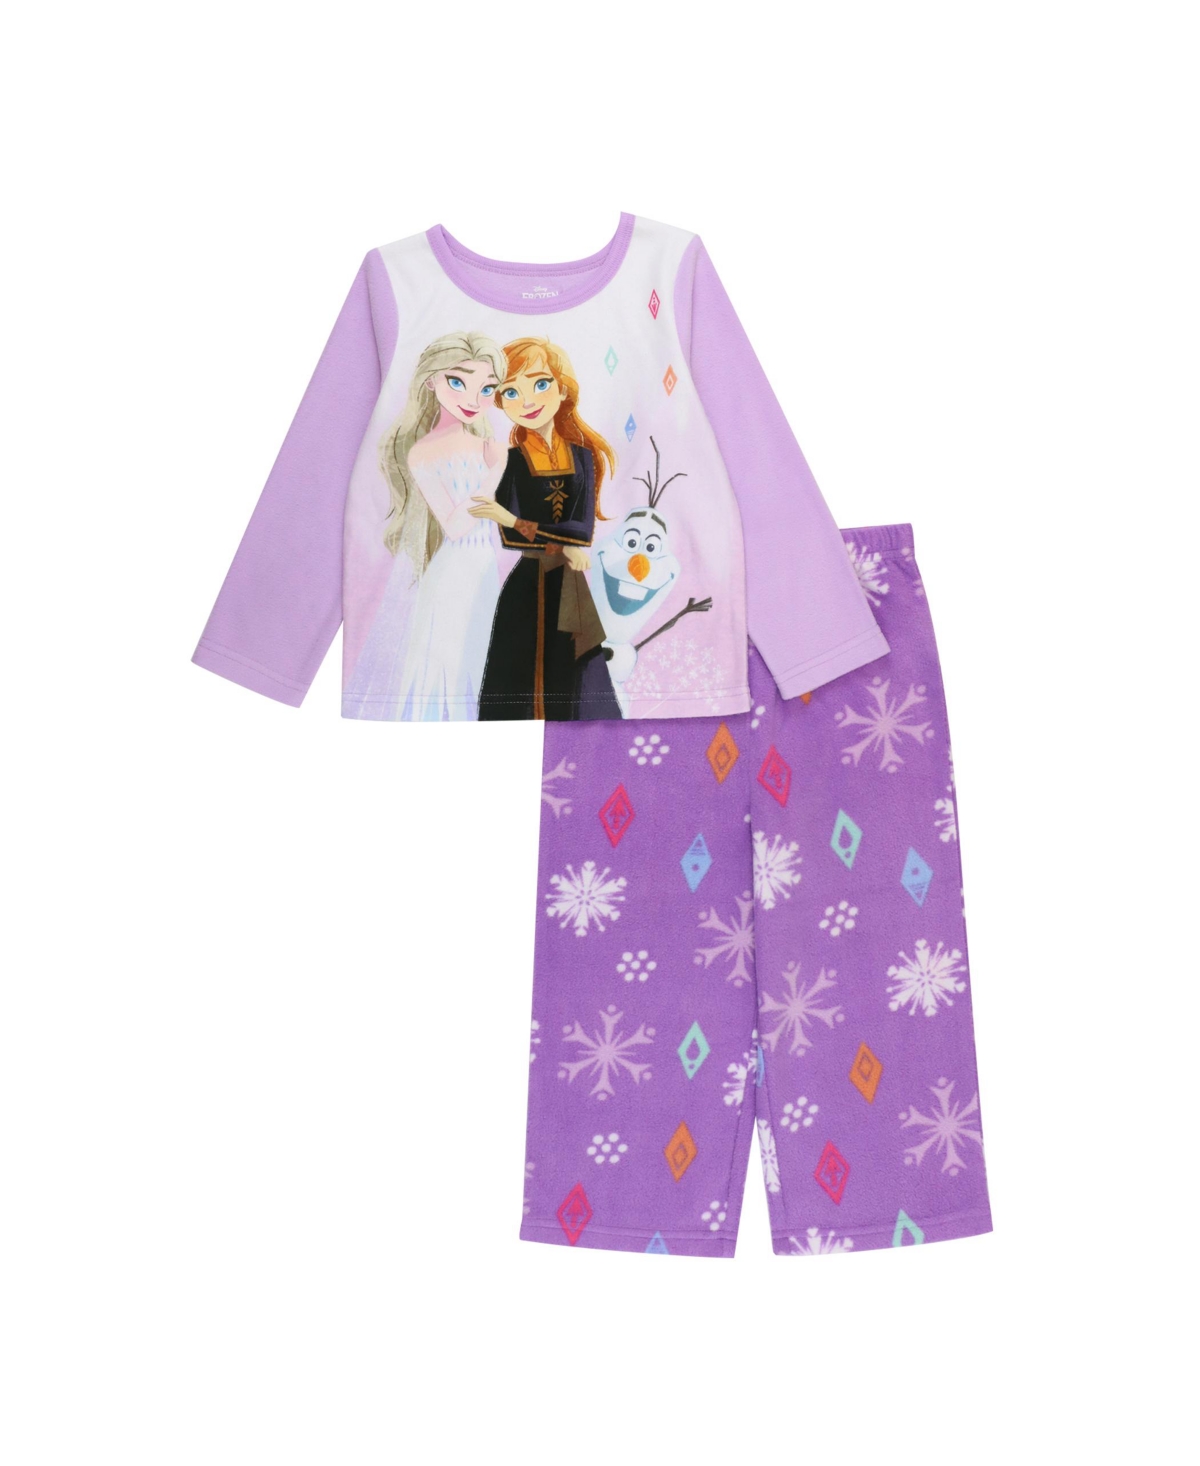 Frozen Kids' Little Girls 2 Top And Pajama, 2 Piece Set In Assorted